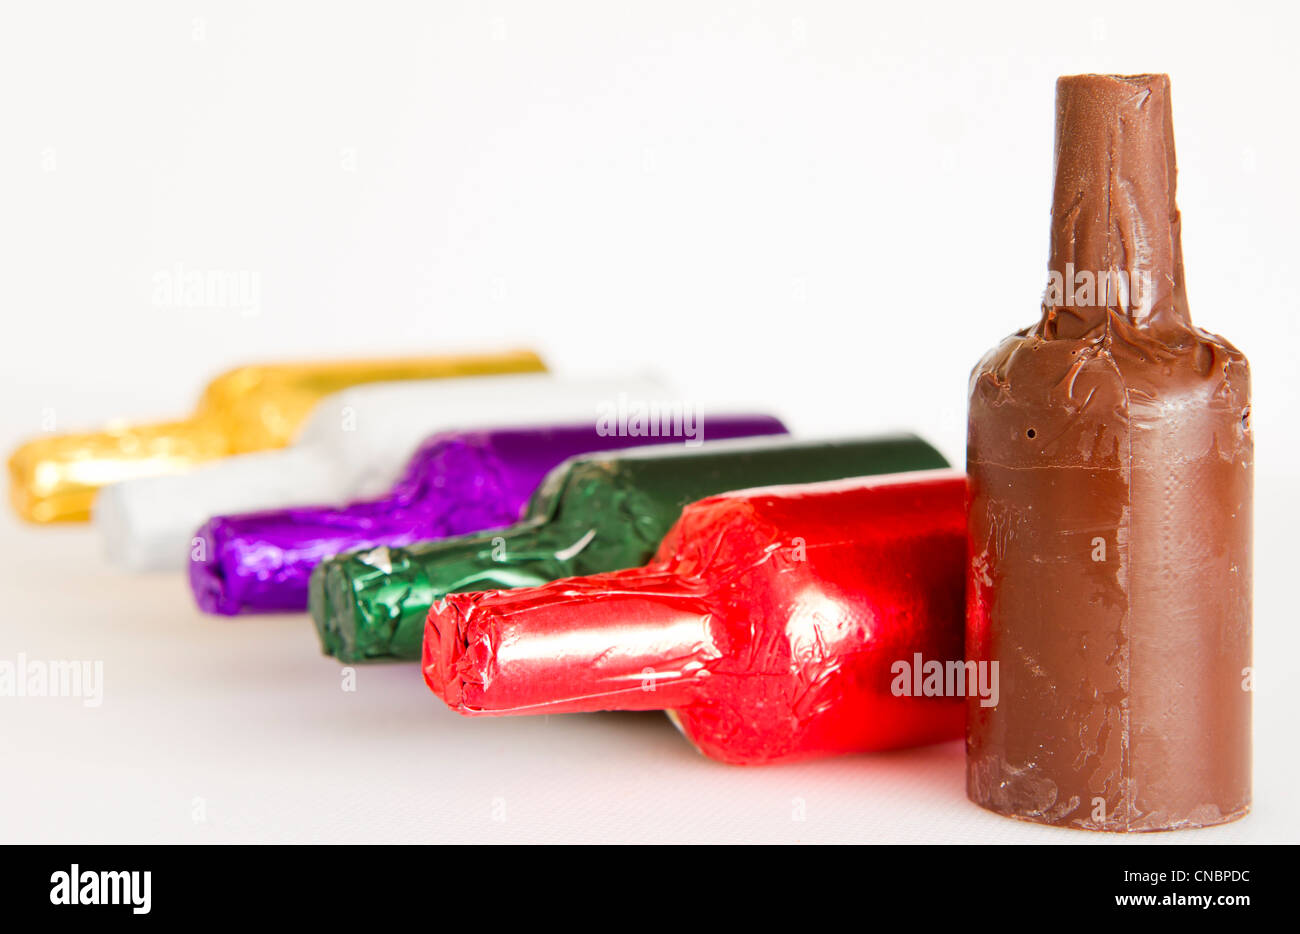 flaschenförmige Schokolade gefüllt mit Likör-Aromen Stockfotografie - Alamy